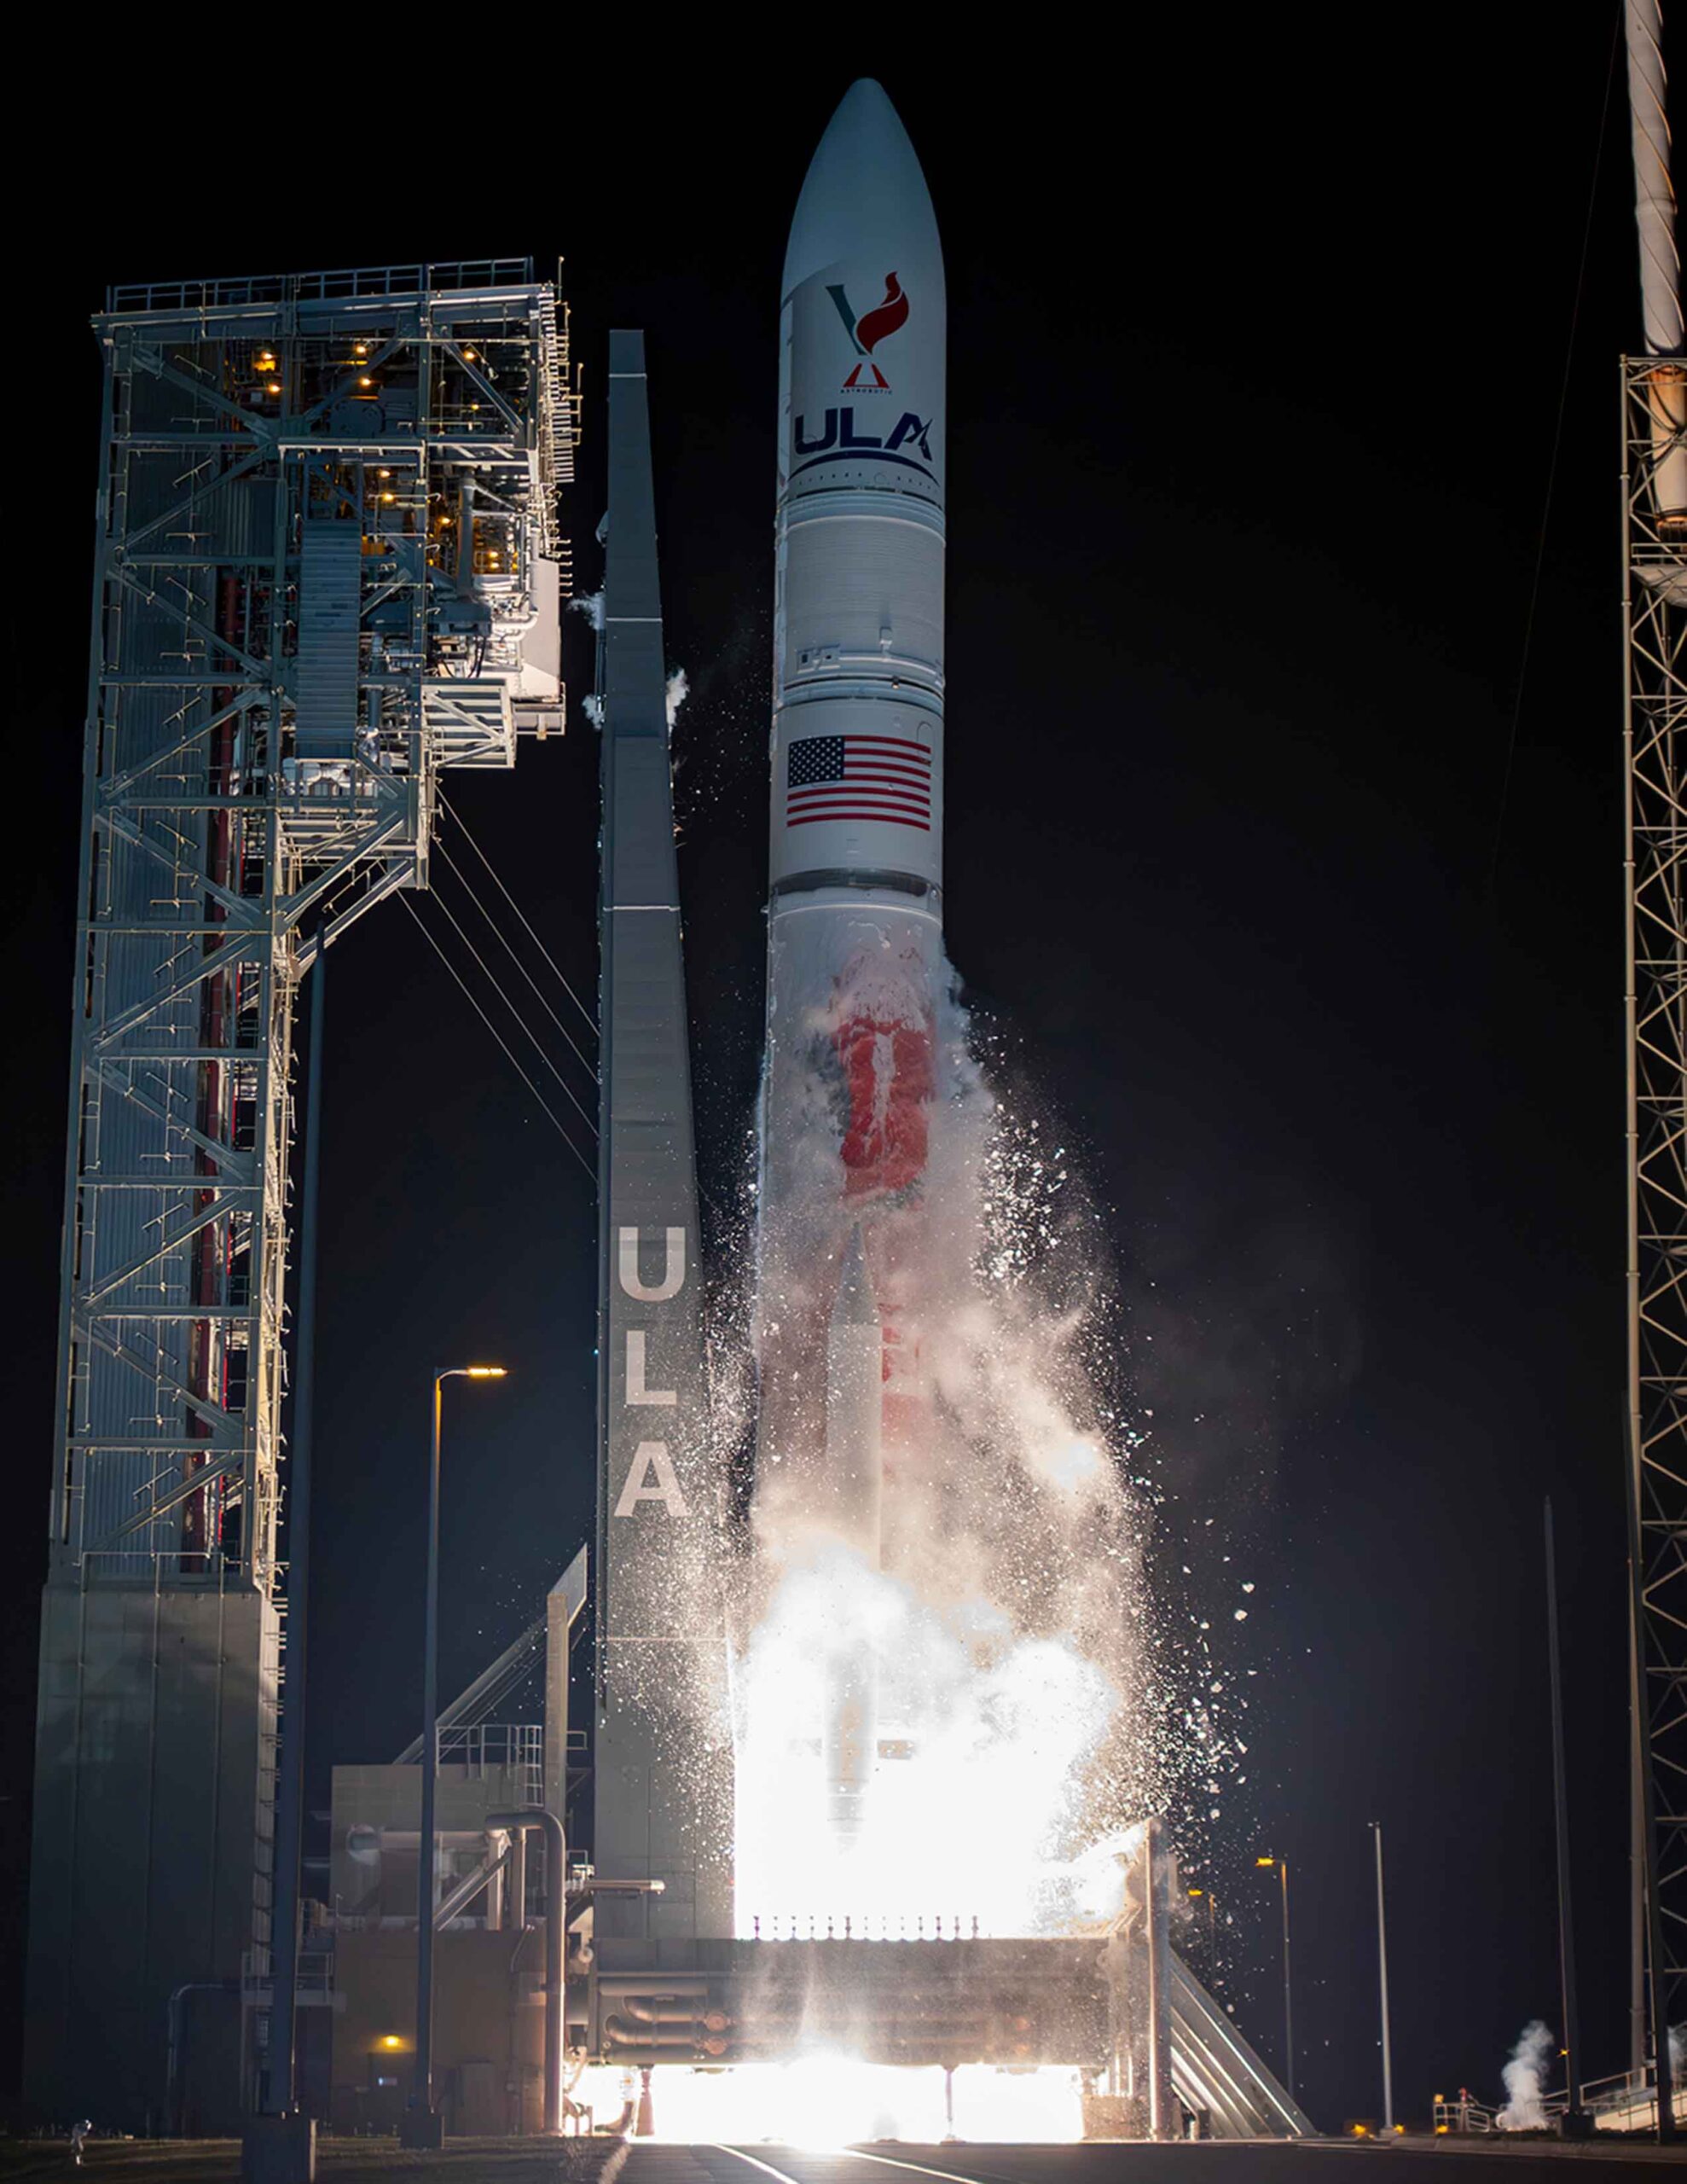 Vulcan Centaur rocket launching off of its launchpad.